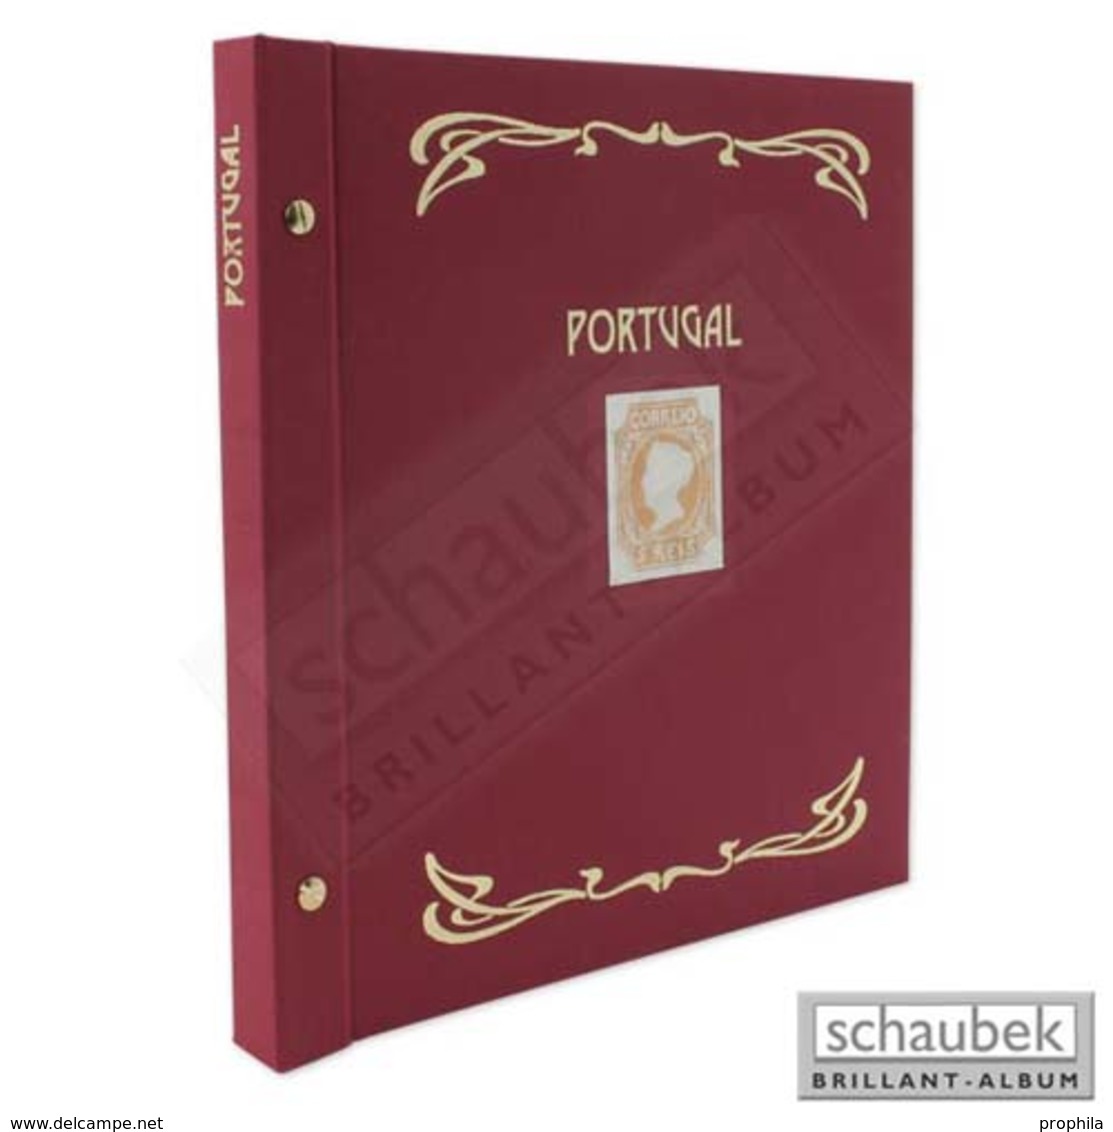 Schaubek Ds0025 Schraubbinder Leinen Schmal Rot, Reprint-Ausführung Portugal - Large Format, Black Pages